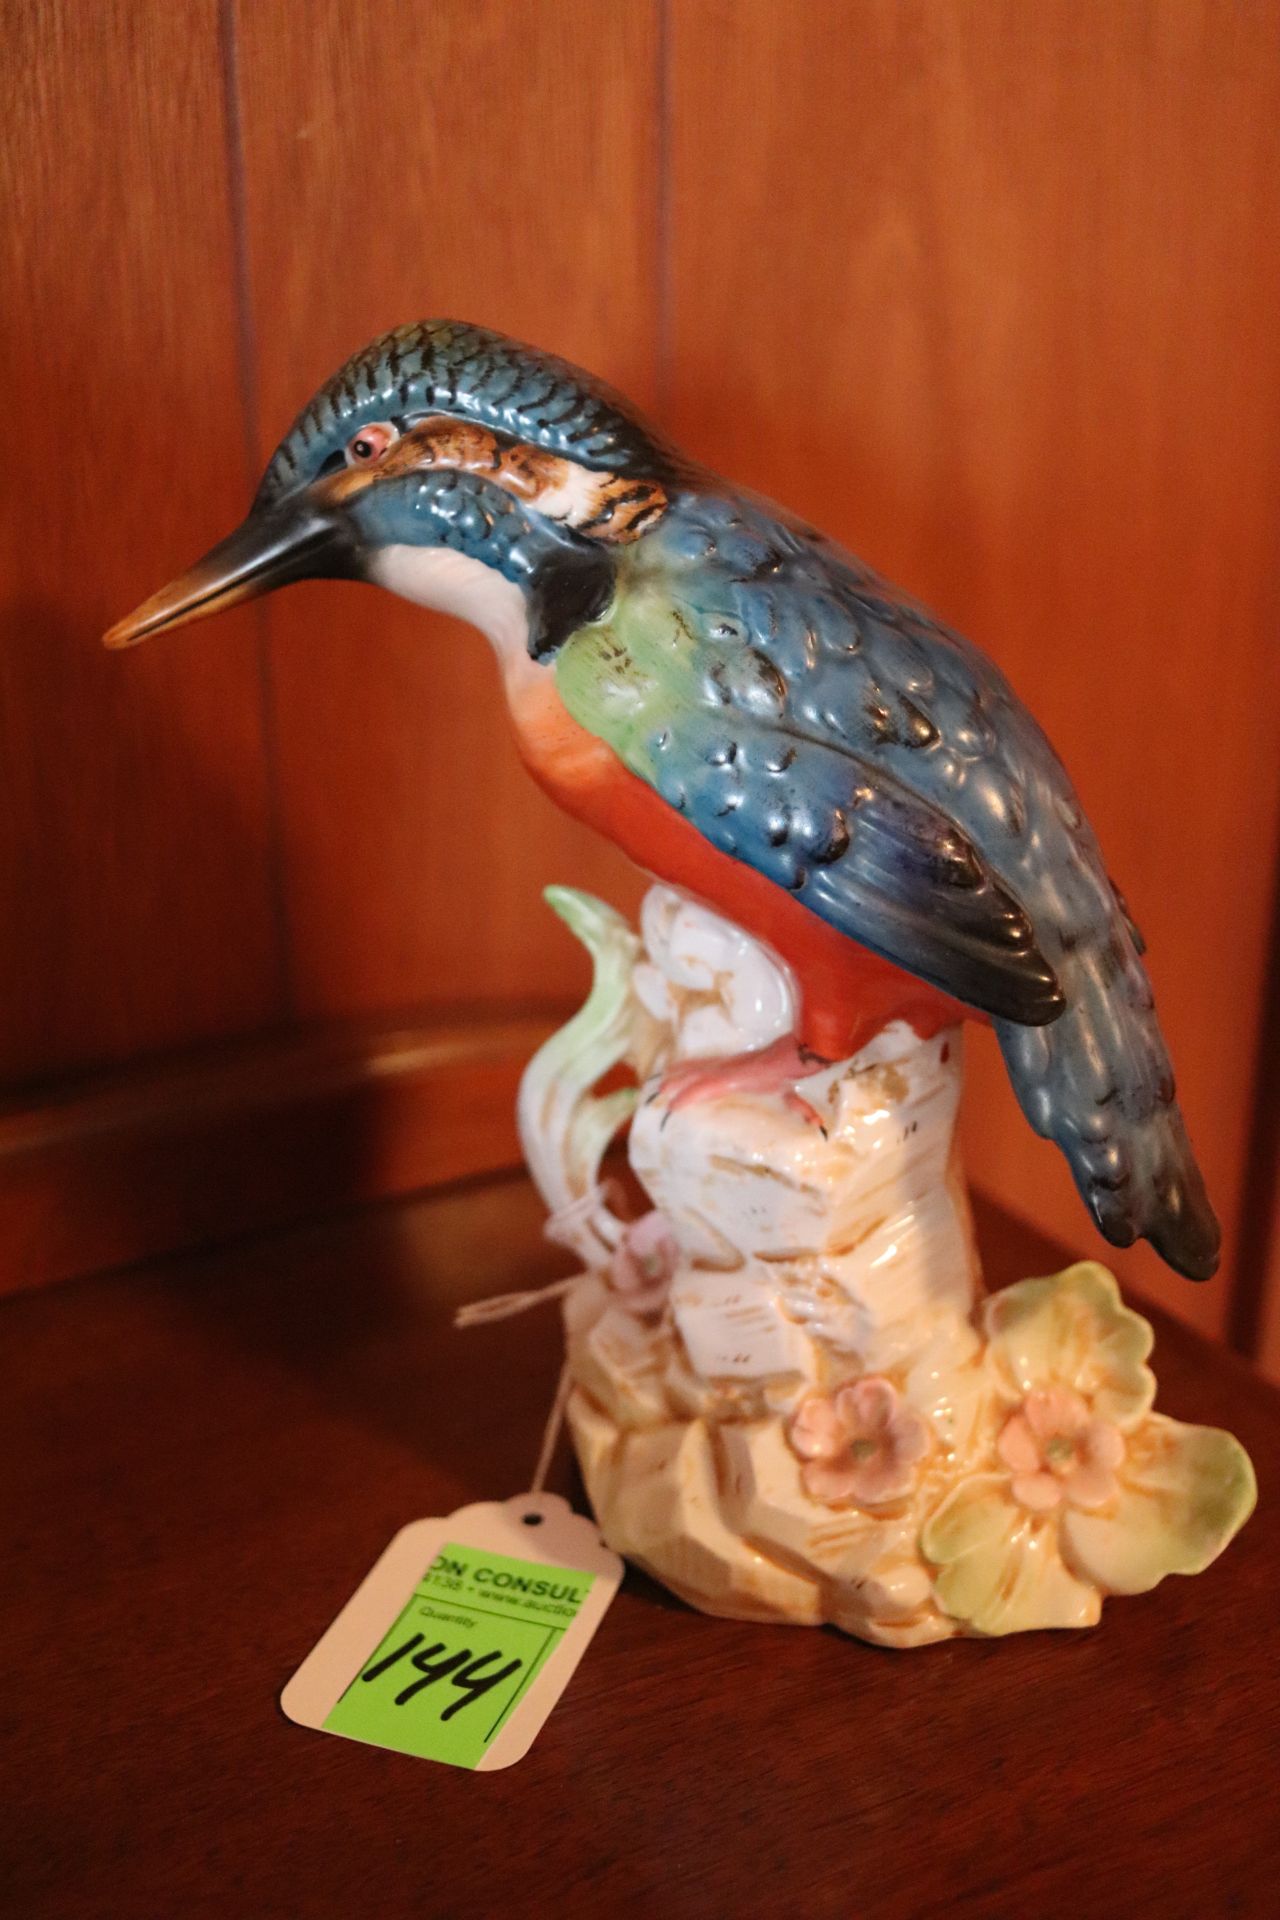 Porcelain figurine depicting hummingbird in floral scene, height 8-1/2"